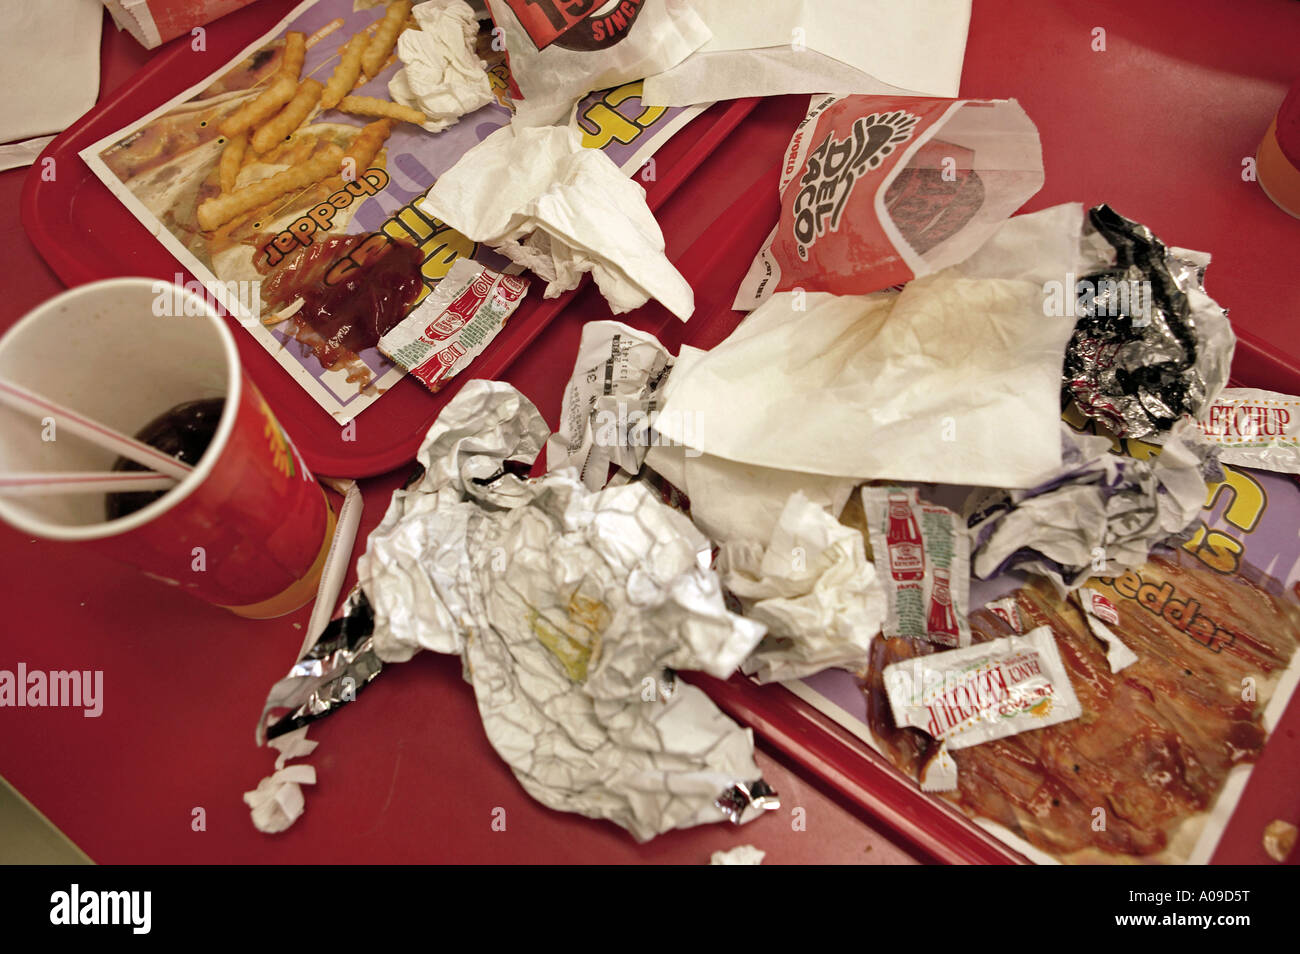 Amerika, Muell in einem Fastfood Restaurant, America garbage at a fastfood restaurant Stock Photo